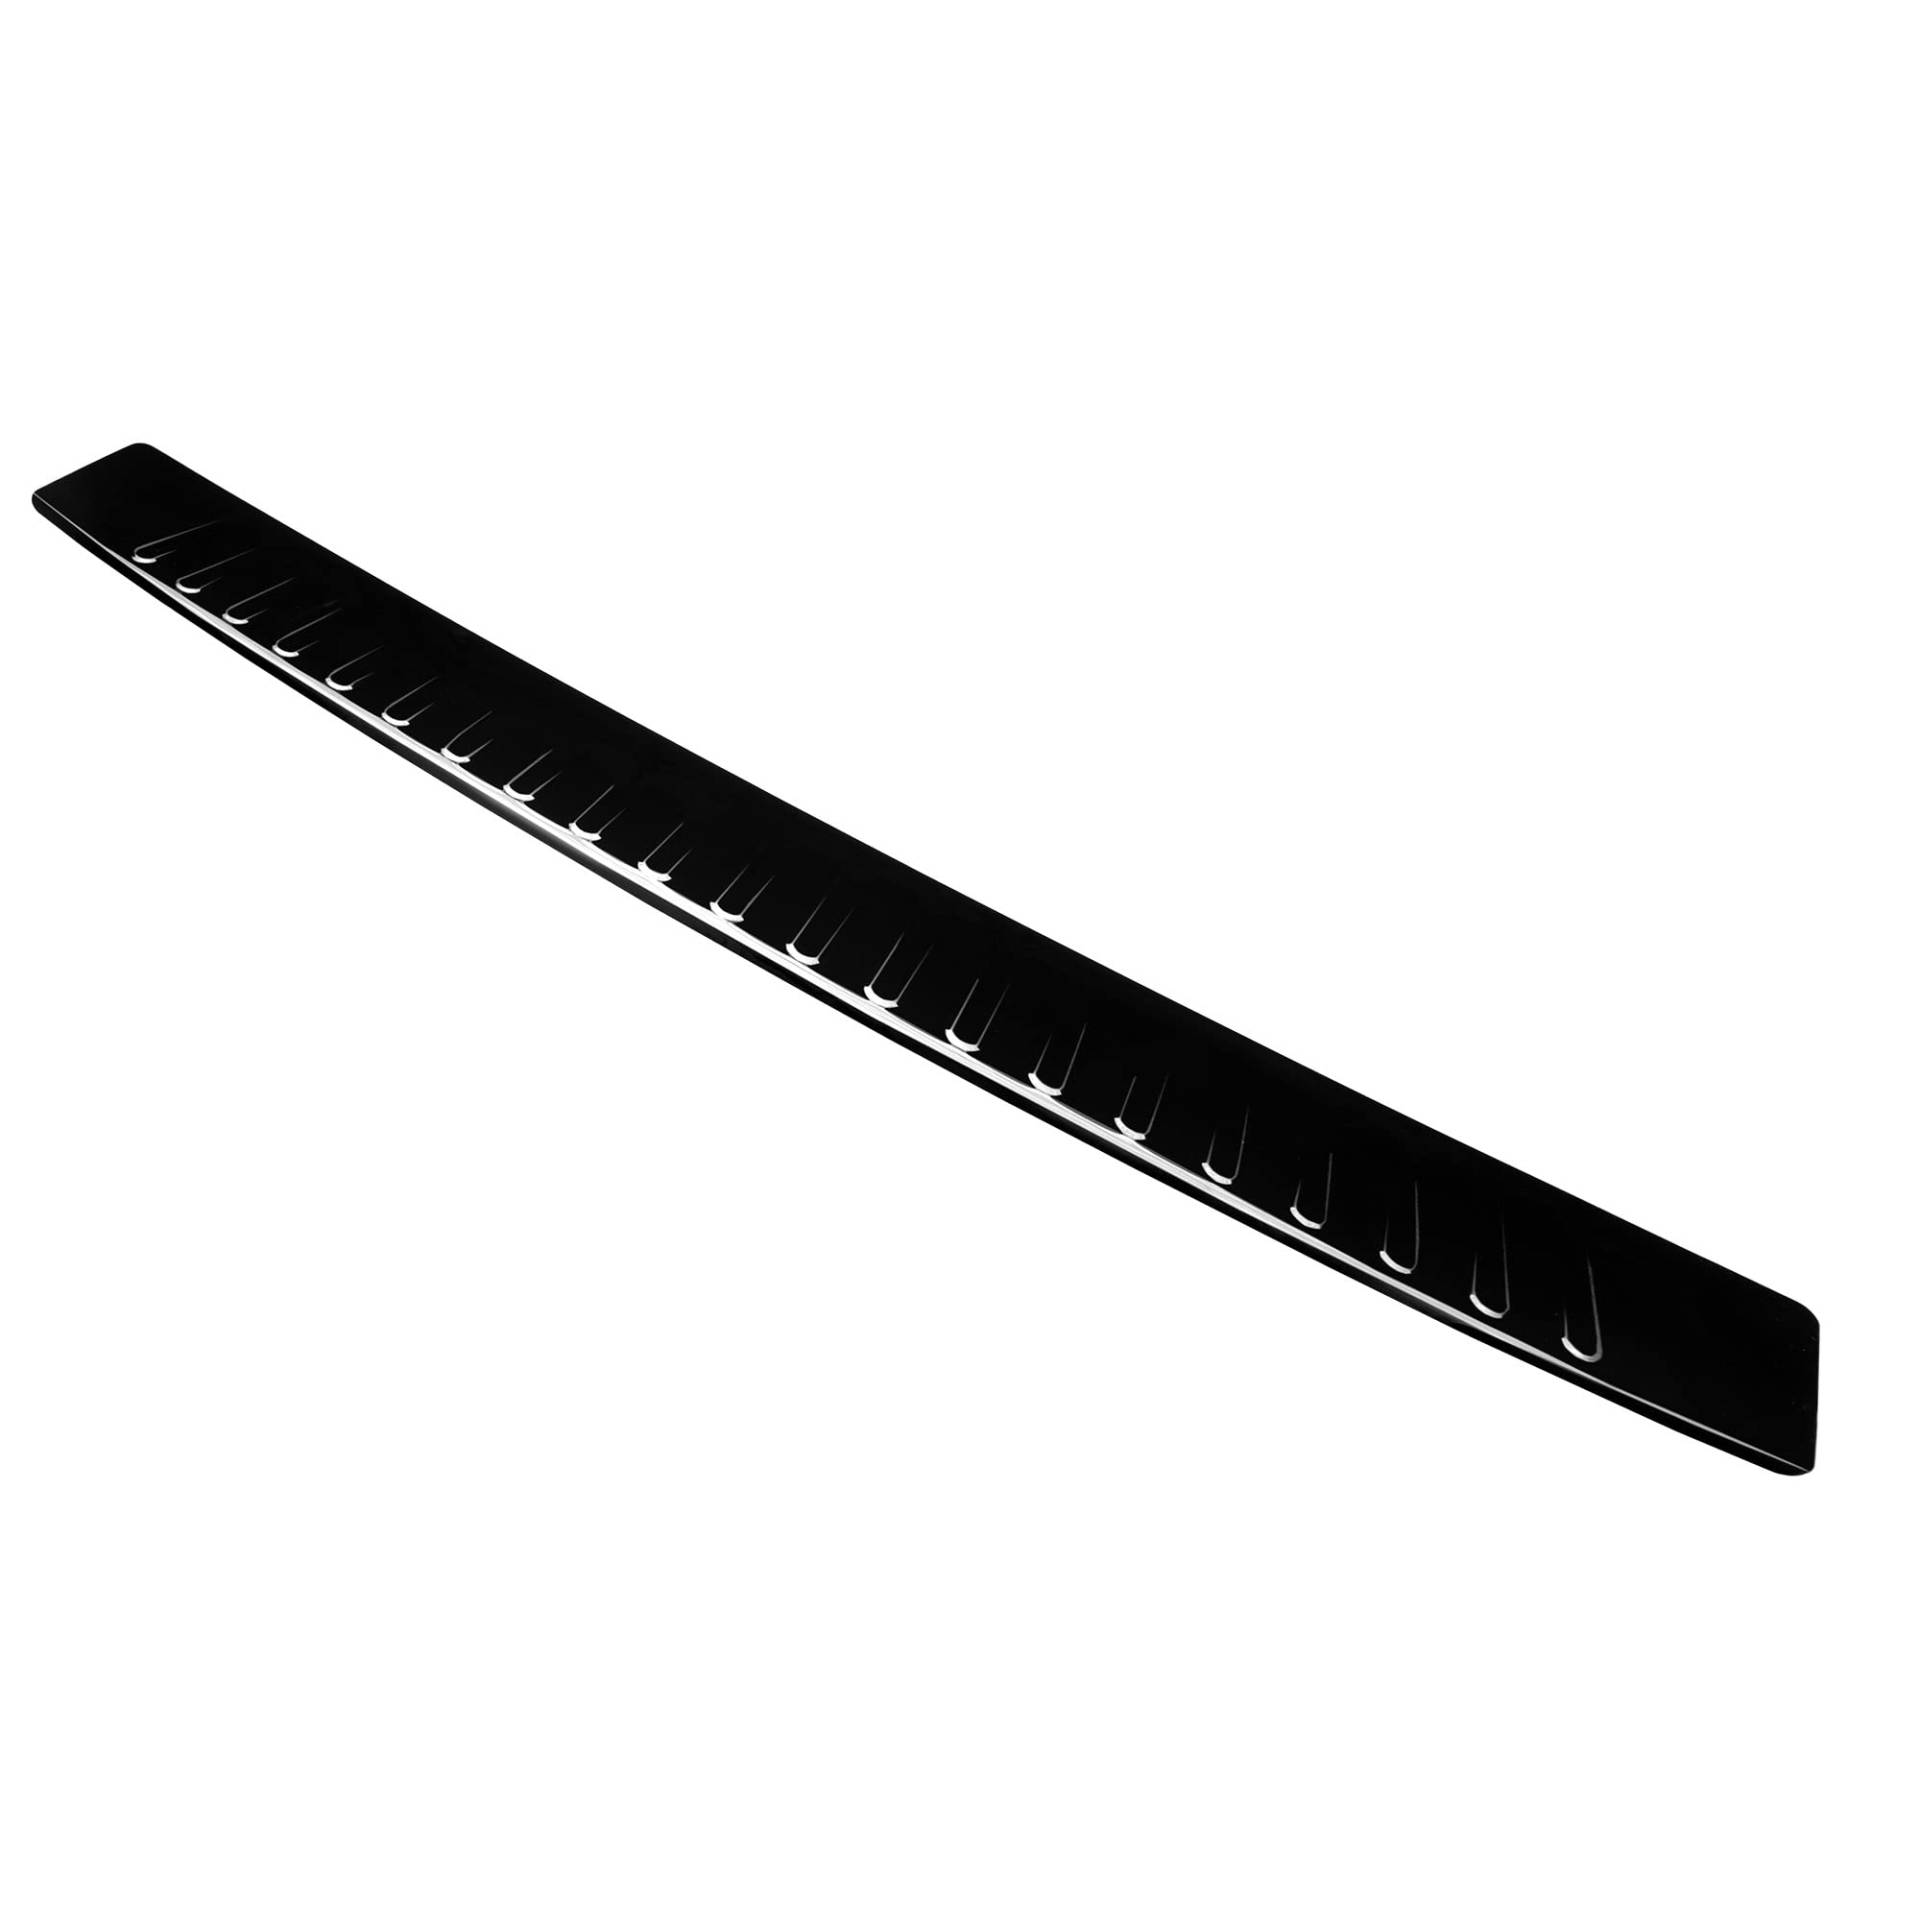 AROBA AR218-BL Edelstahl Schwarz Black Chrome Ladekantenschutz kompatibel mit Mini Countryman R60 BJ. 9.2010-11.2016 passgenau Abkantung Farbe Schwarz-Anthrazit von AROBA